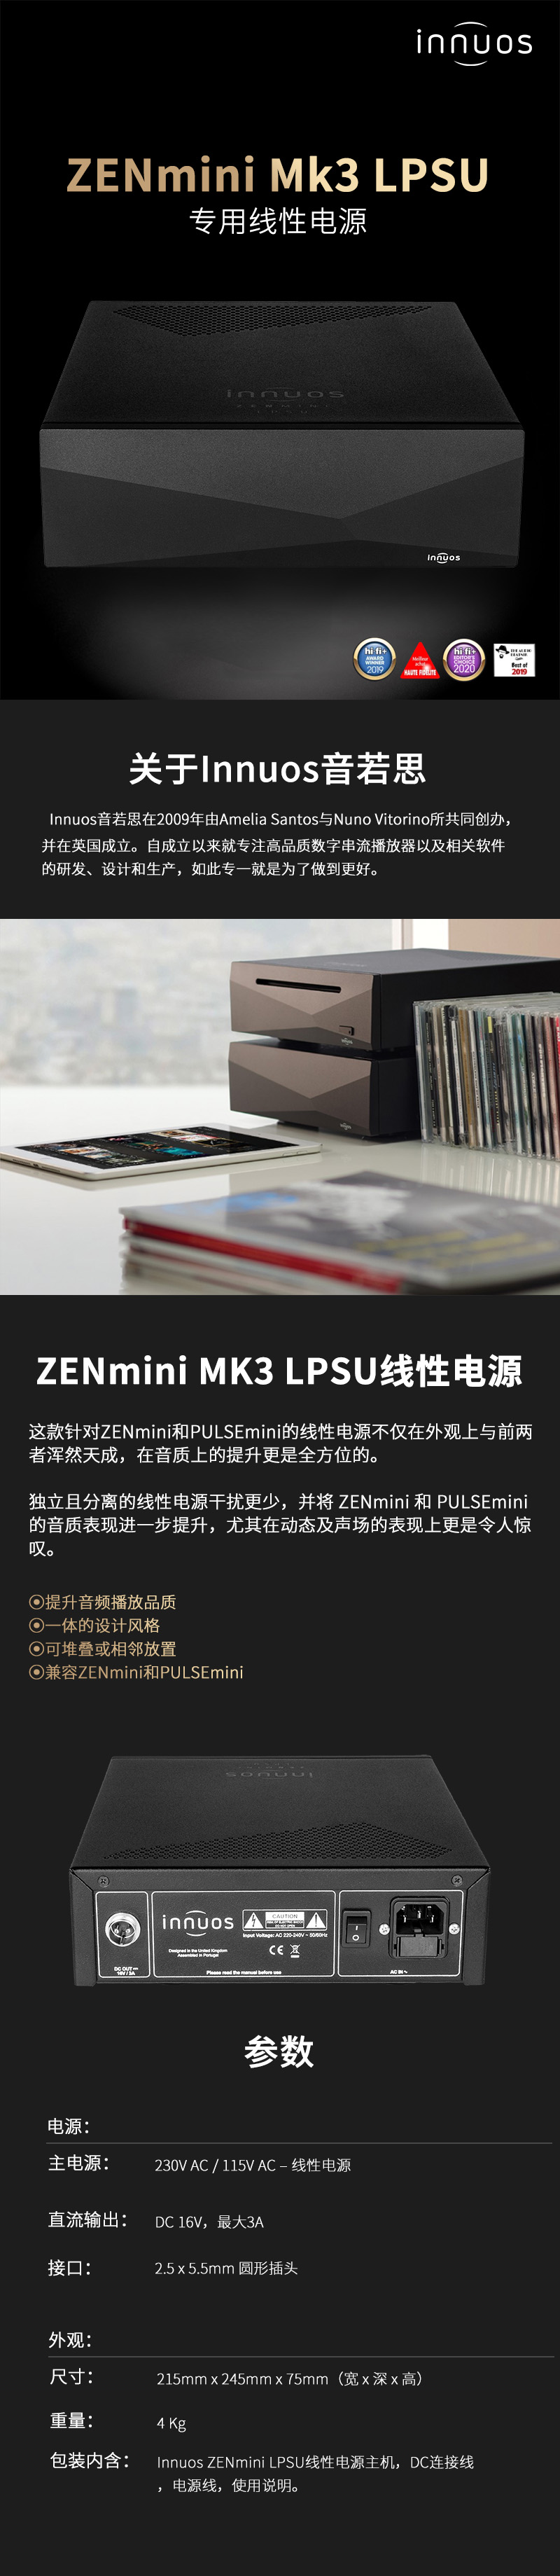 ZENmini Mk3 LPSU详情.jpg